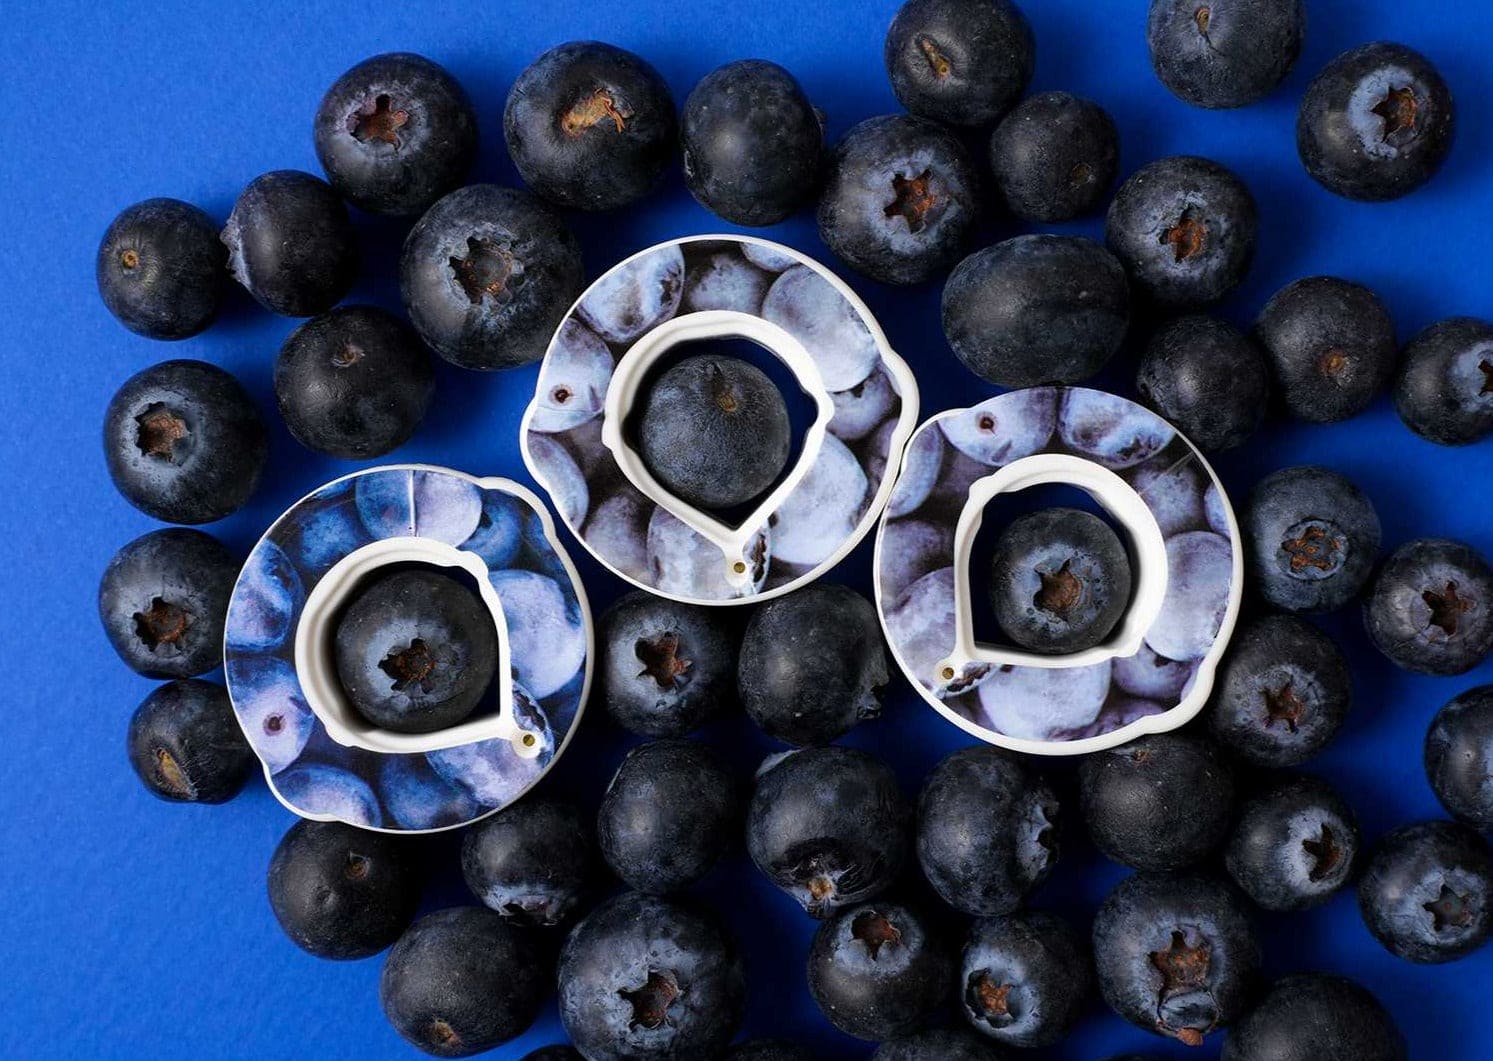 Blueberry pods